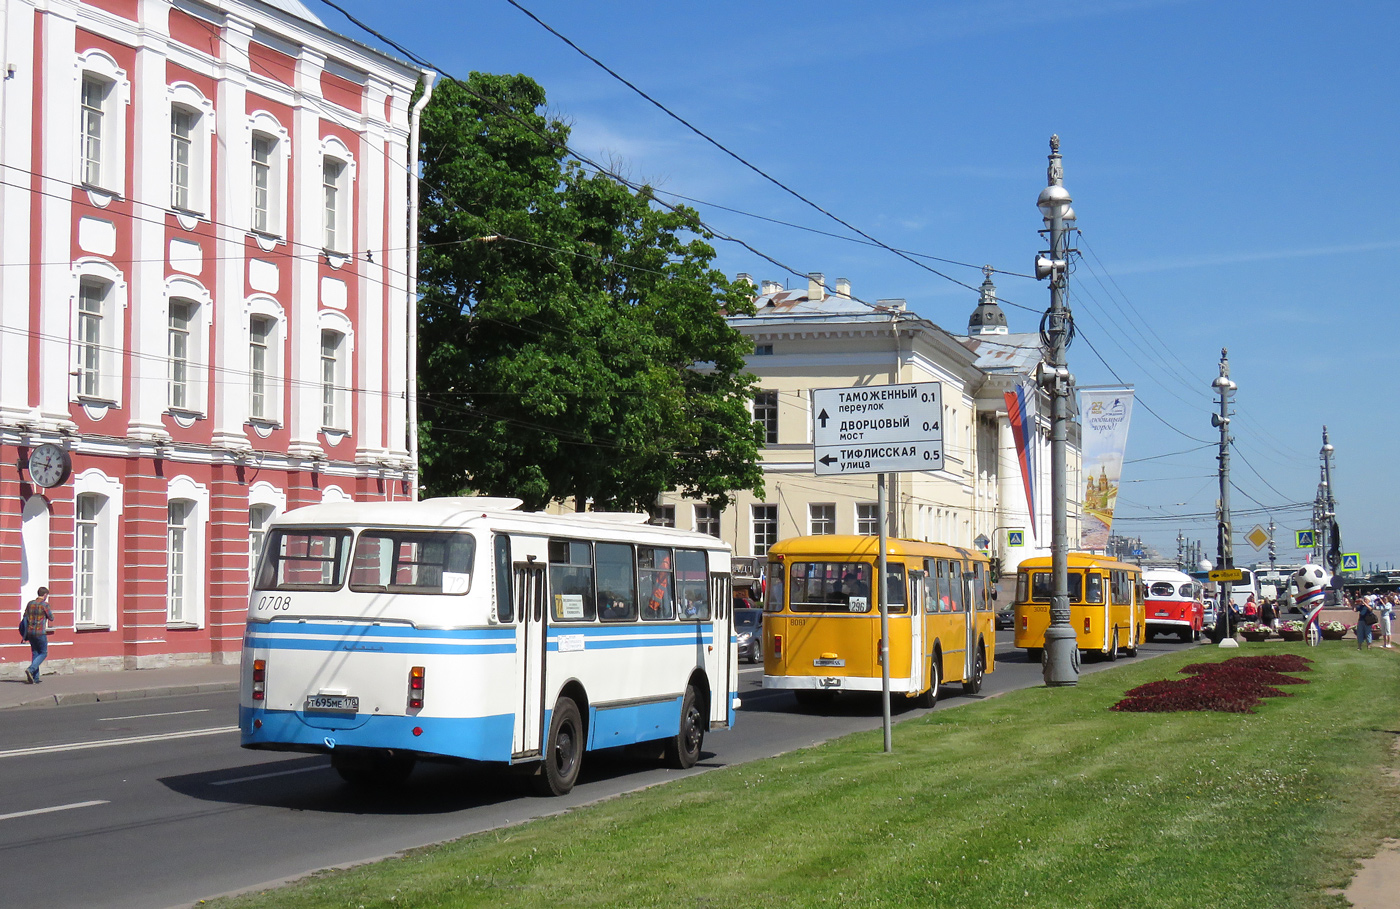 Sanktpēterburga, LAZ-695N № 0708; Sanktpēterburga — IV St.Petersburg Retro Transport Parade, May 26, 2018